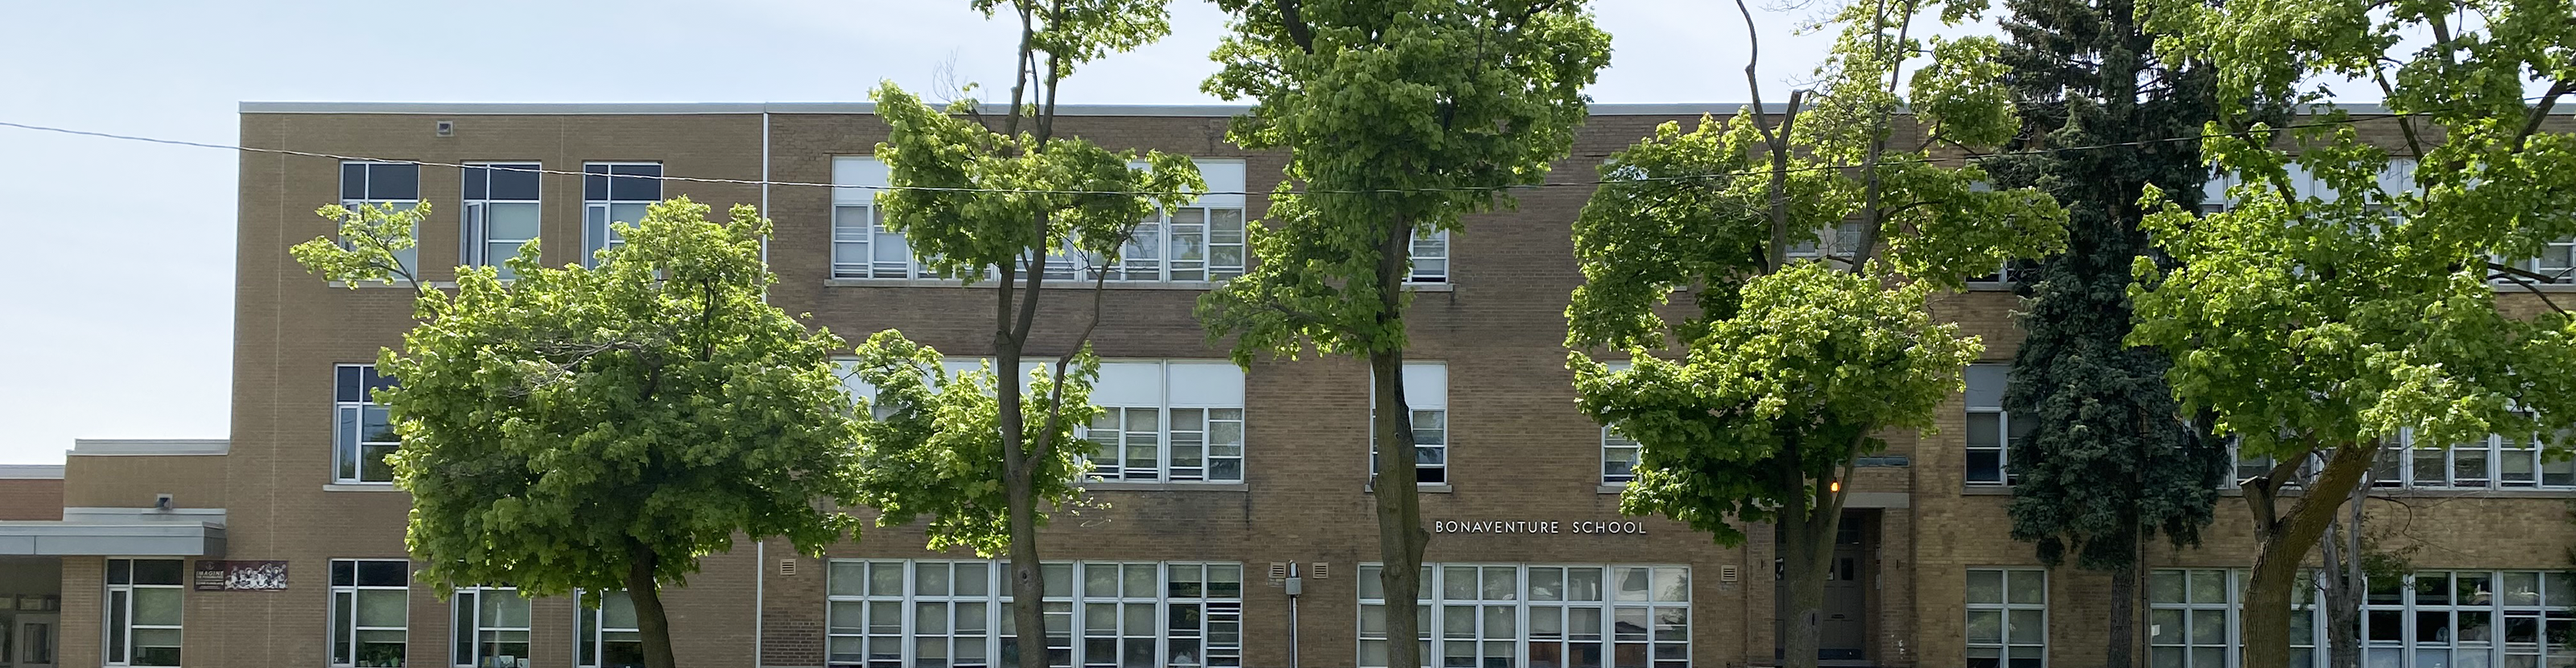 The front of the St. Bonaventure Catholic School building.